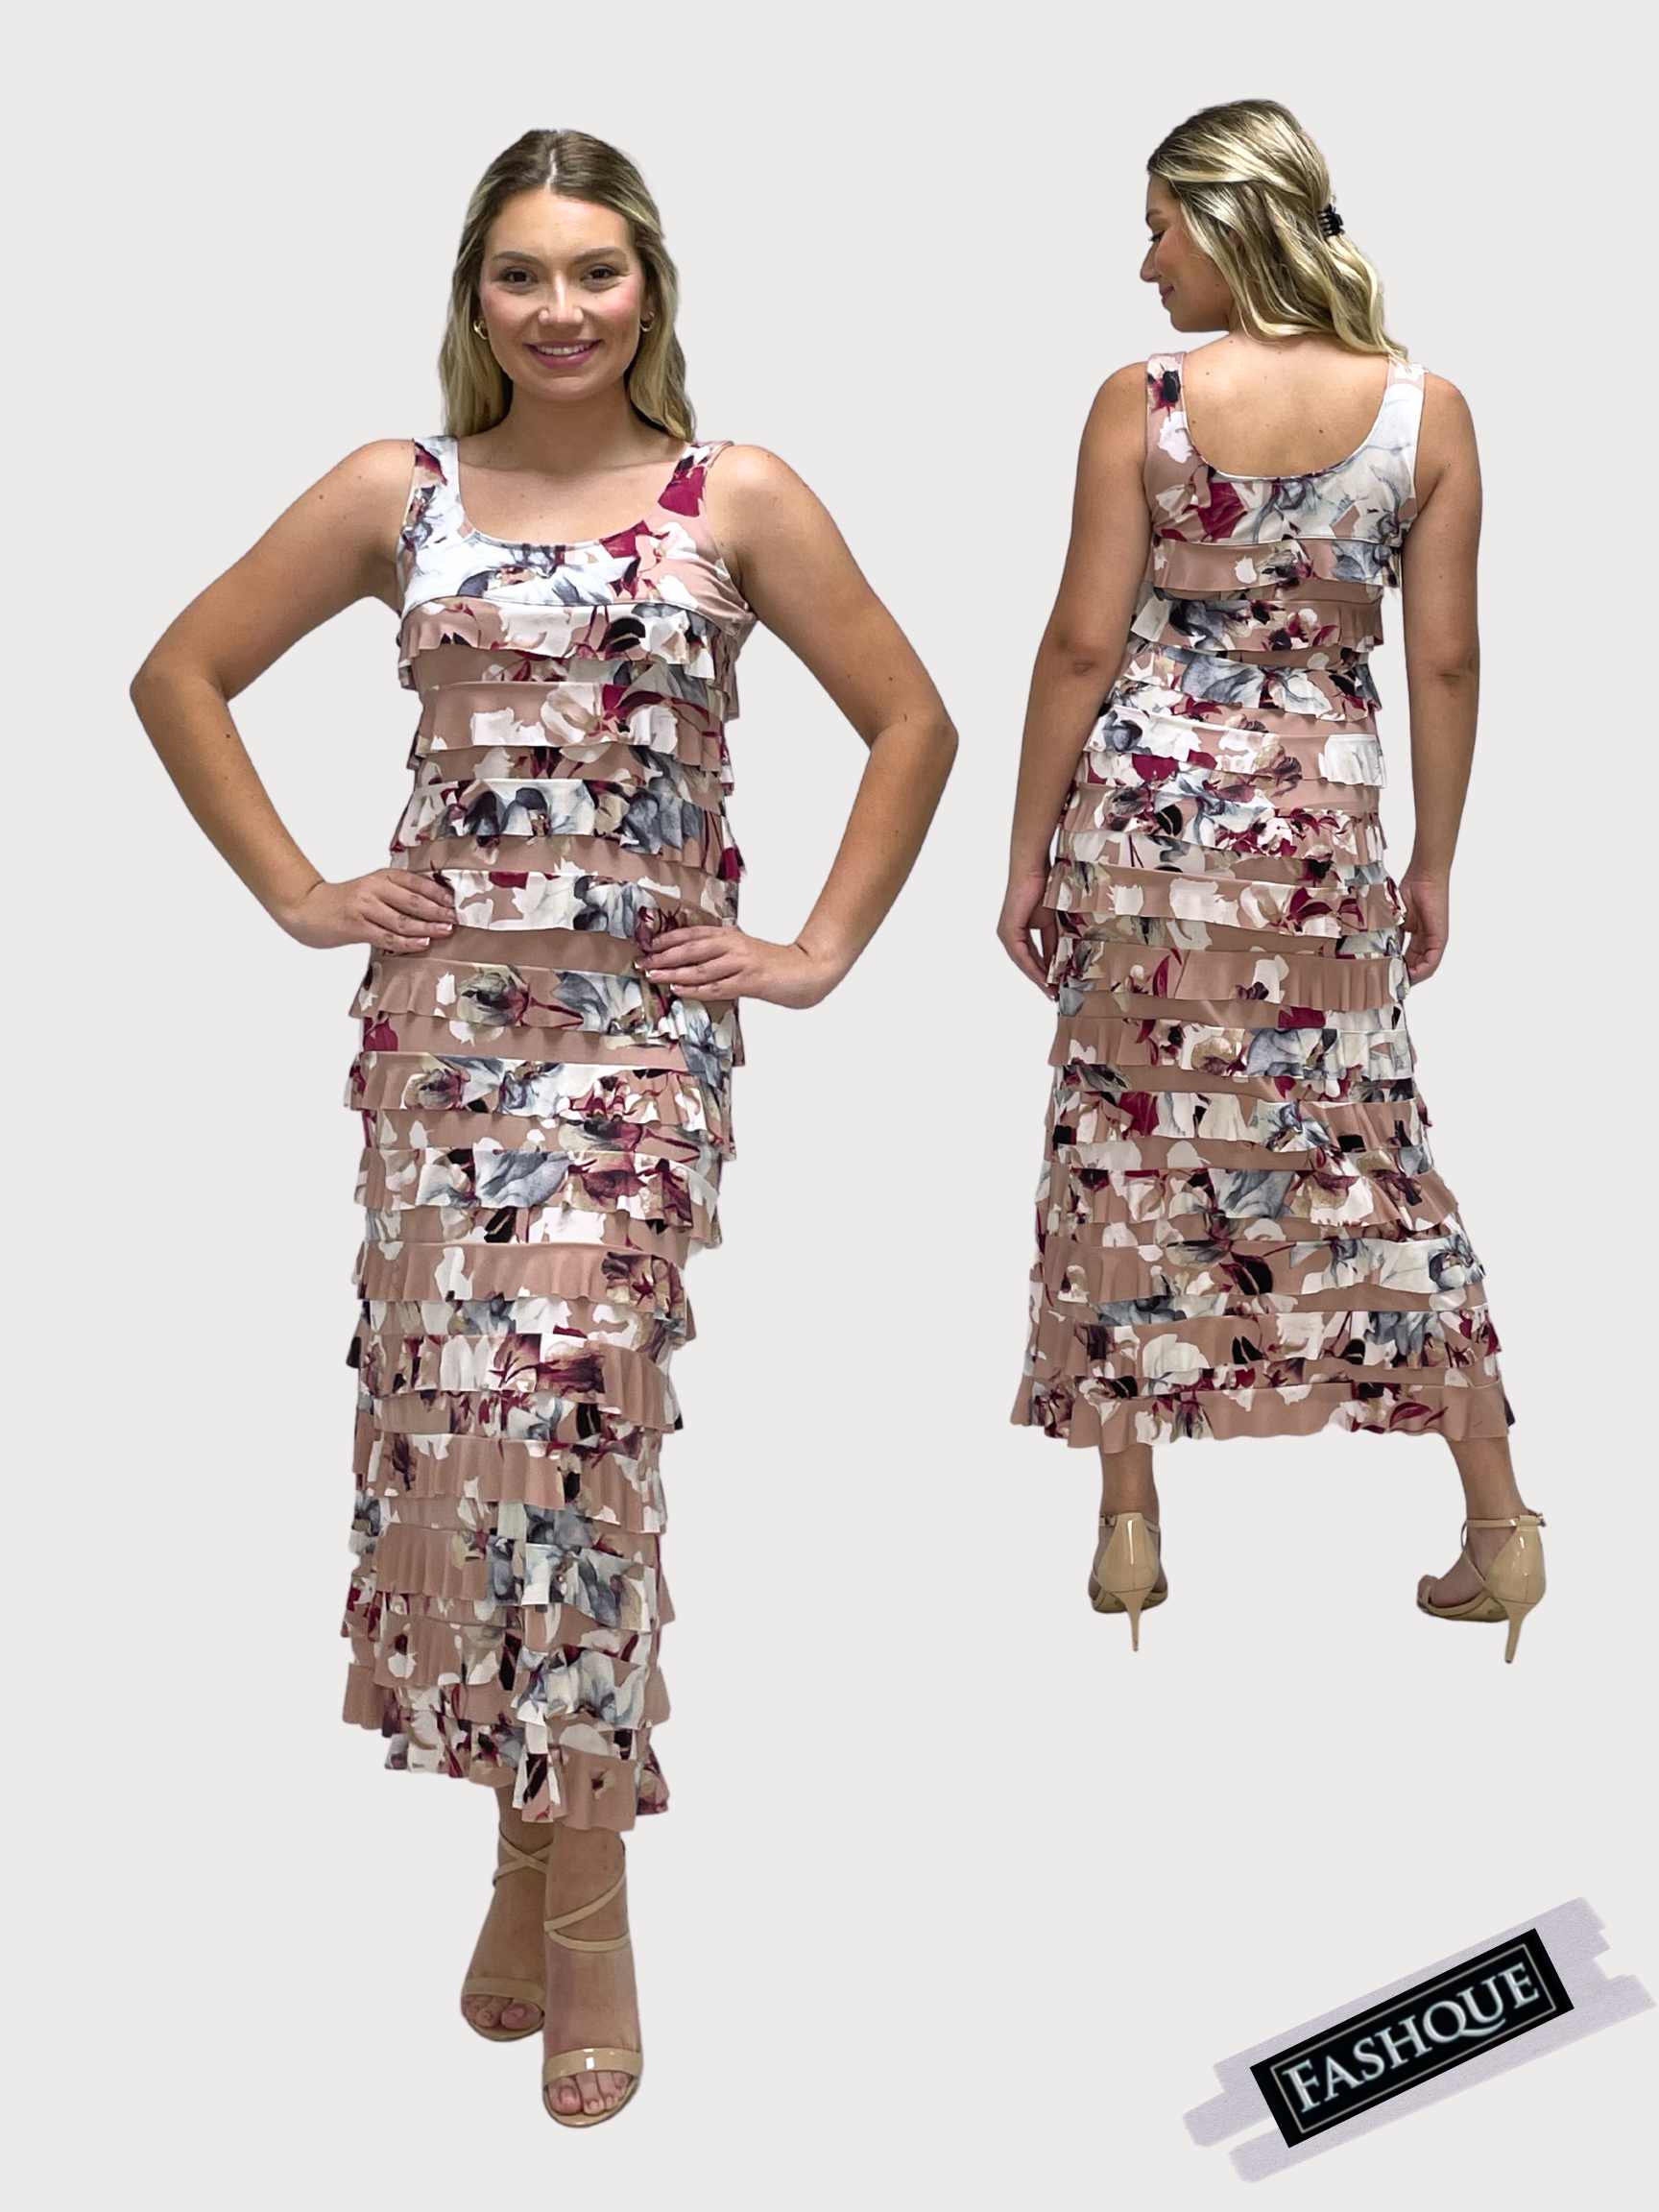 FASHQUE - Ruffle Maxi Dress Sleeveless NEW PRINTED - D211